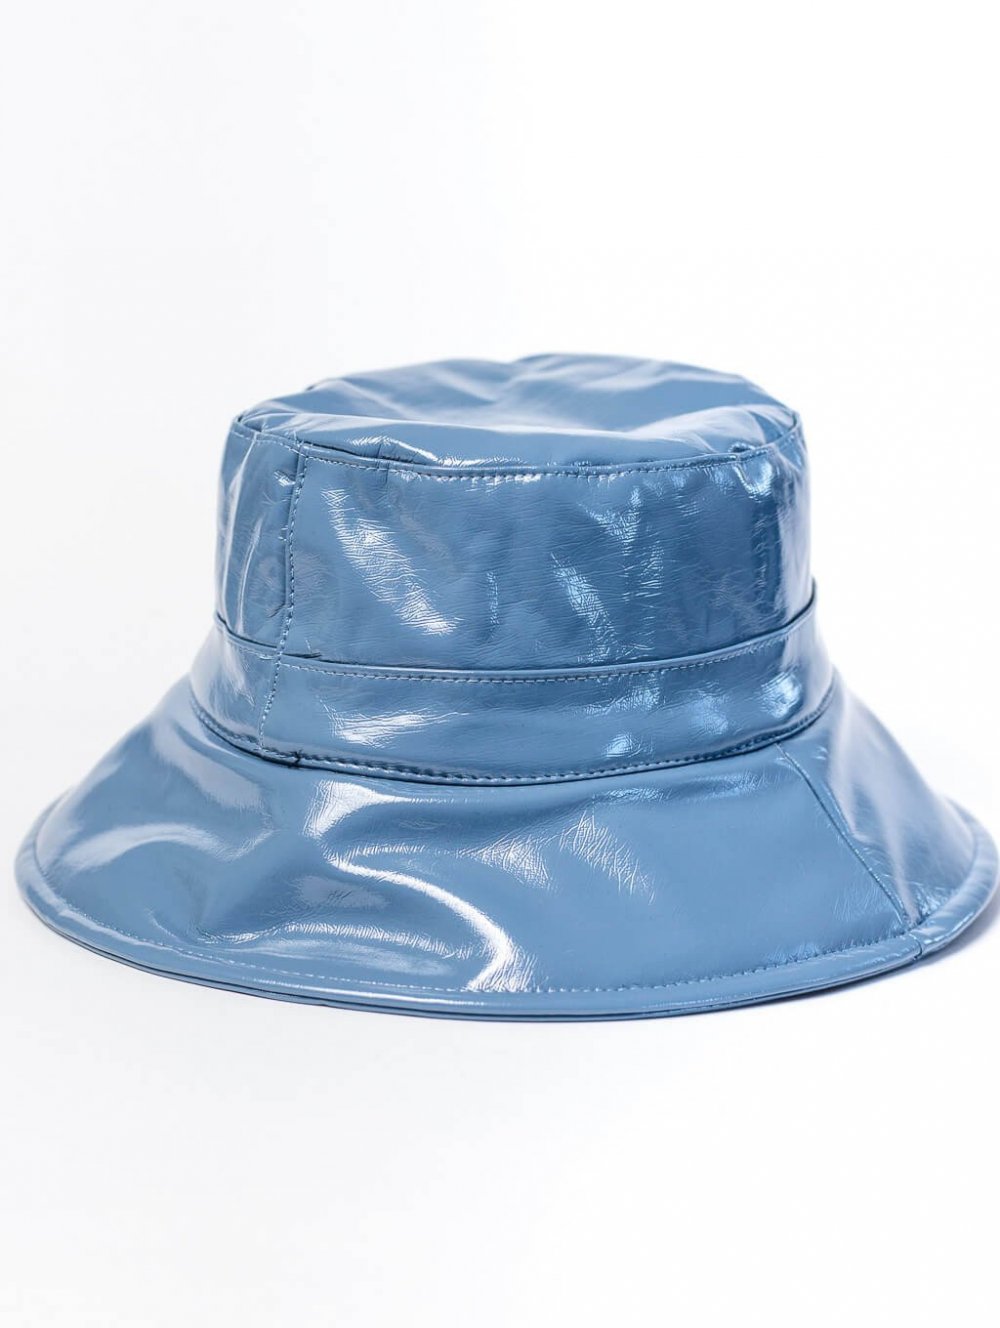 Modrý klobouk Venna